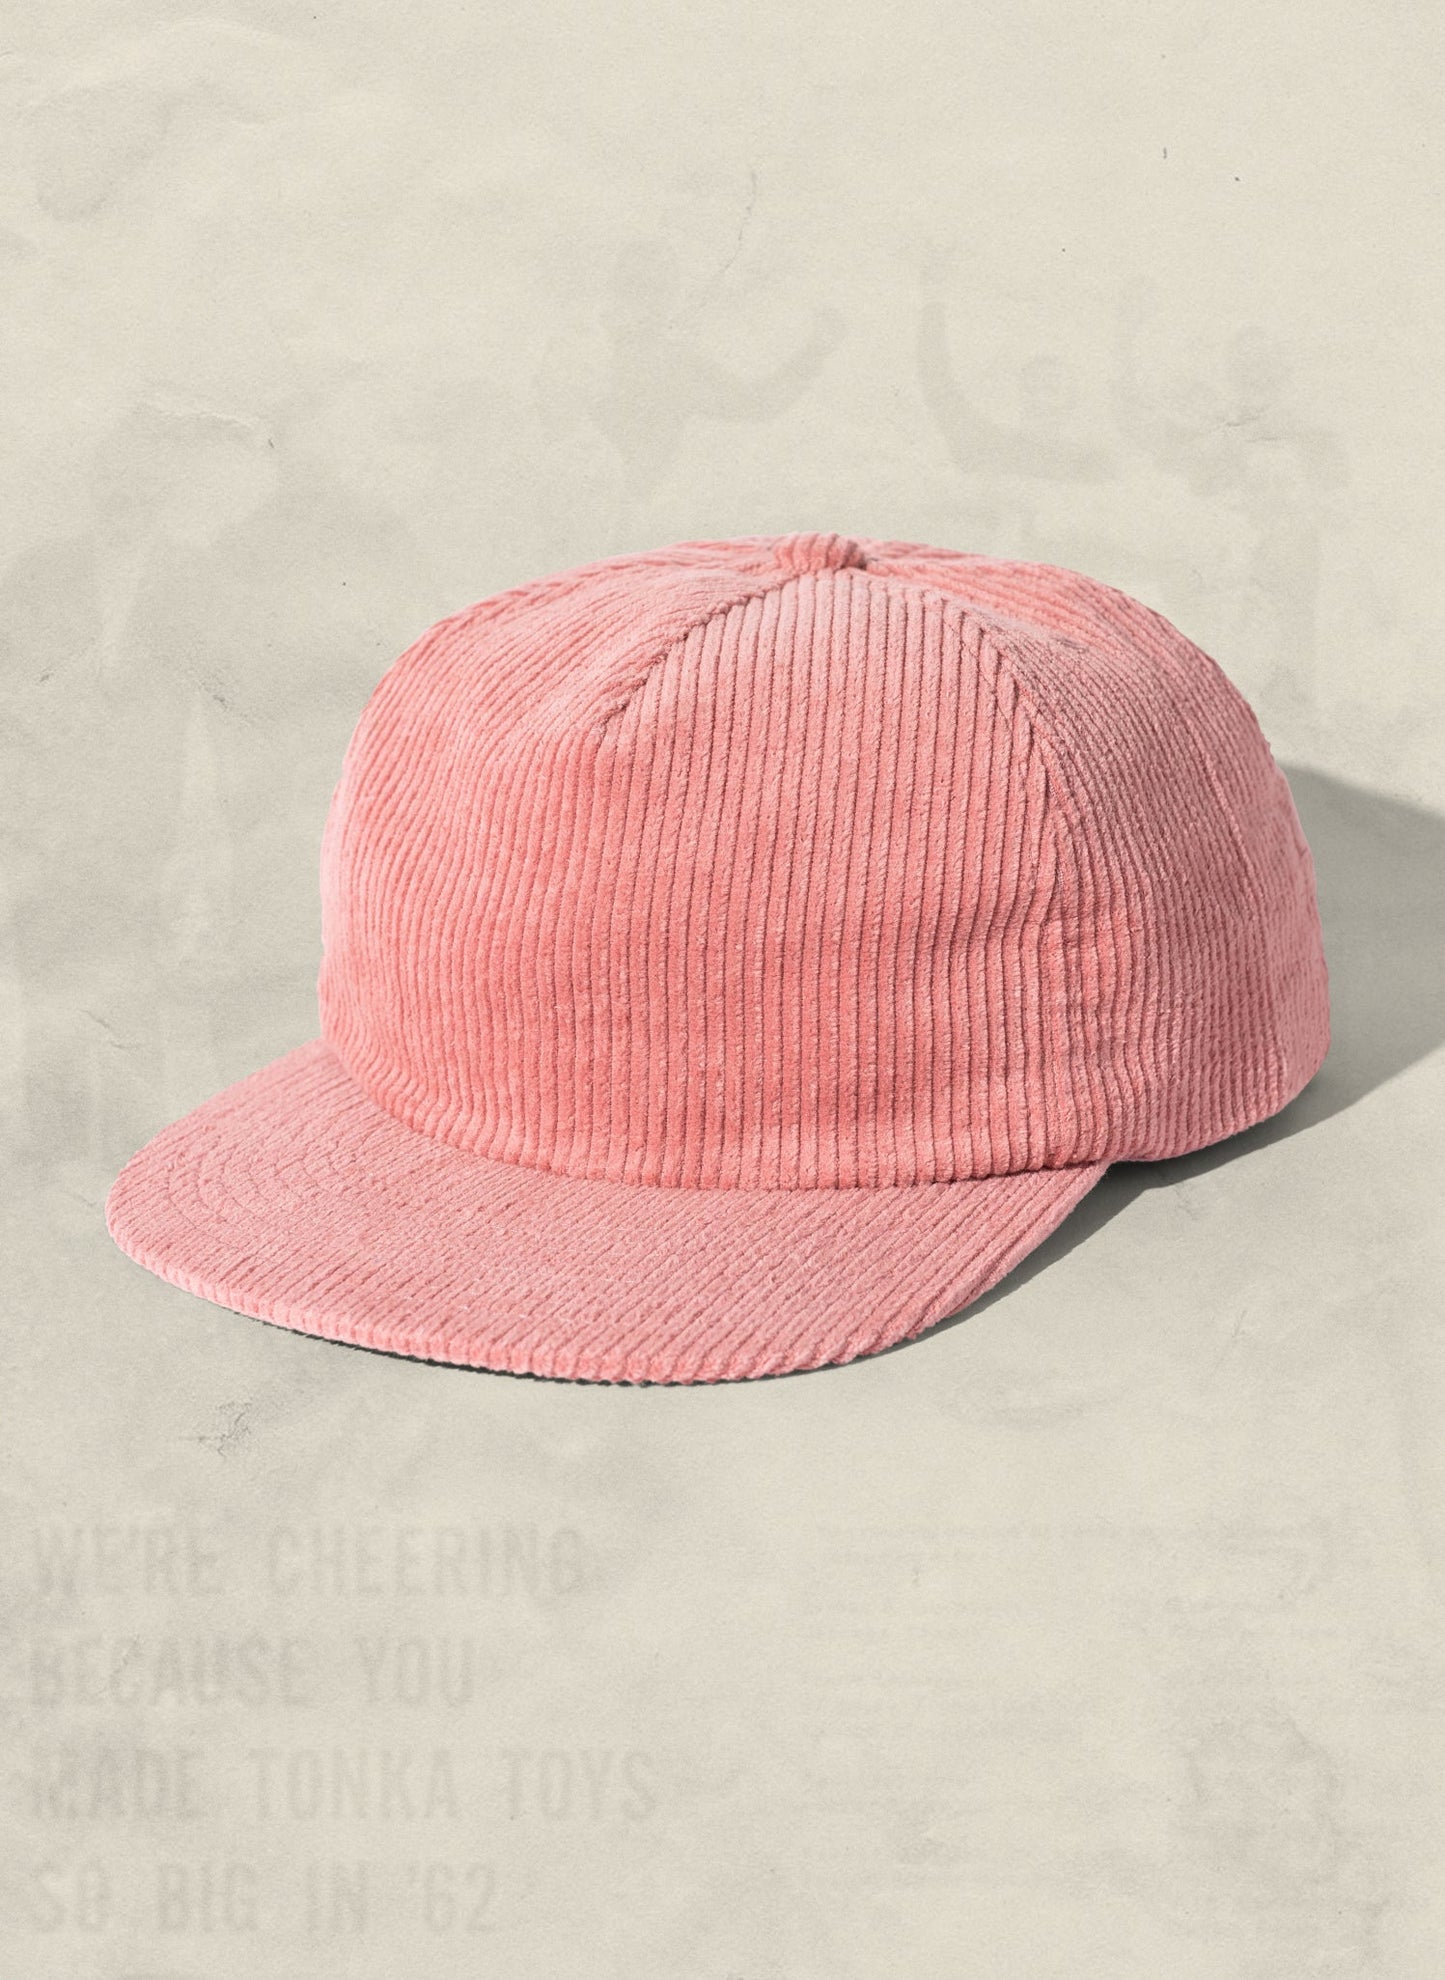 Weld Mfg Field Trip Hat - Unstructured 5 panel corduroy strapback hat, vintage inspired baseball hat, pink